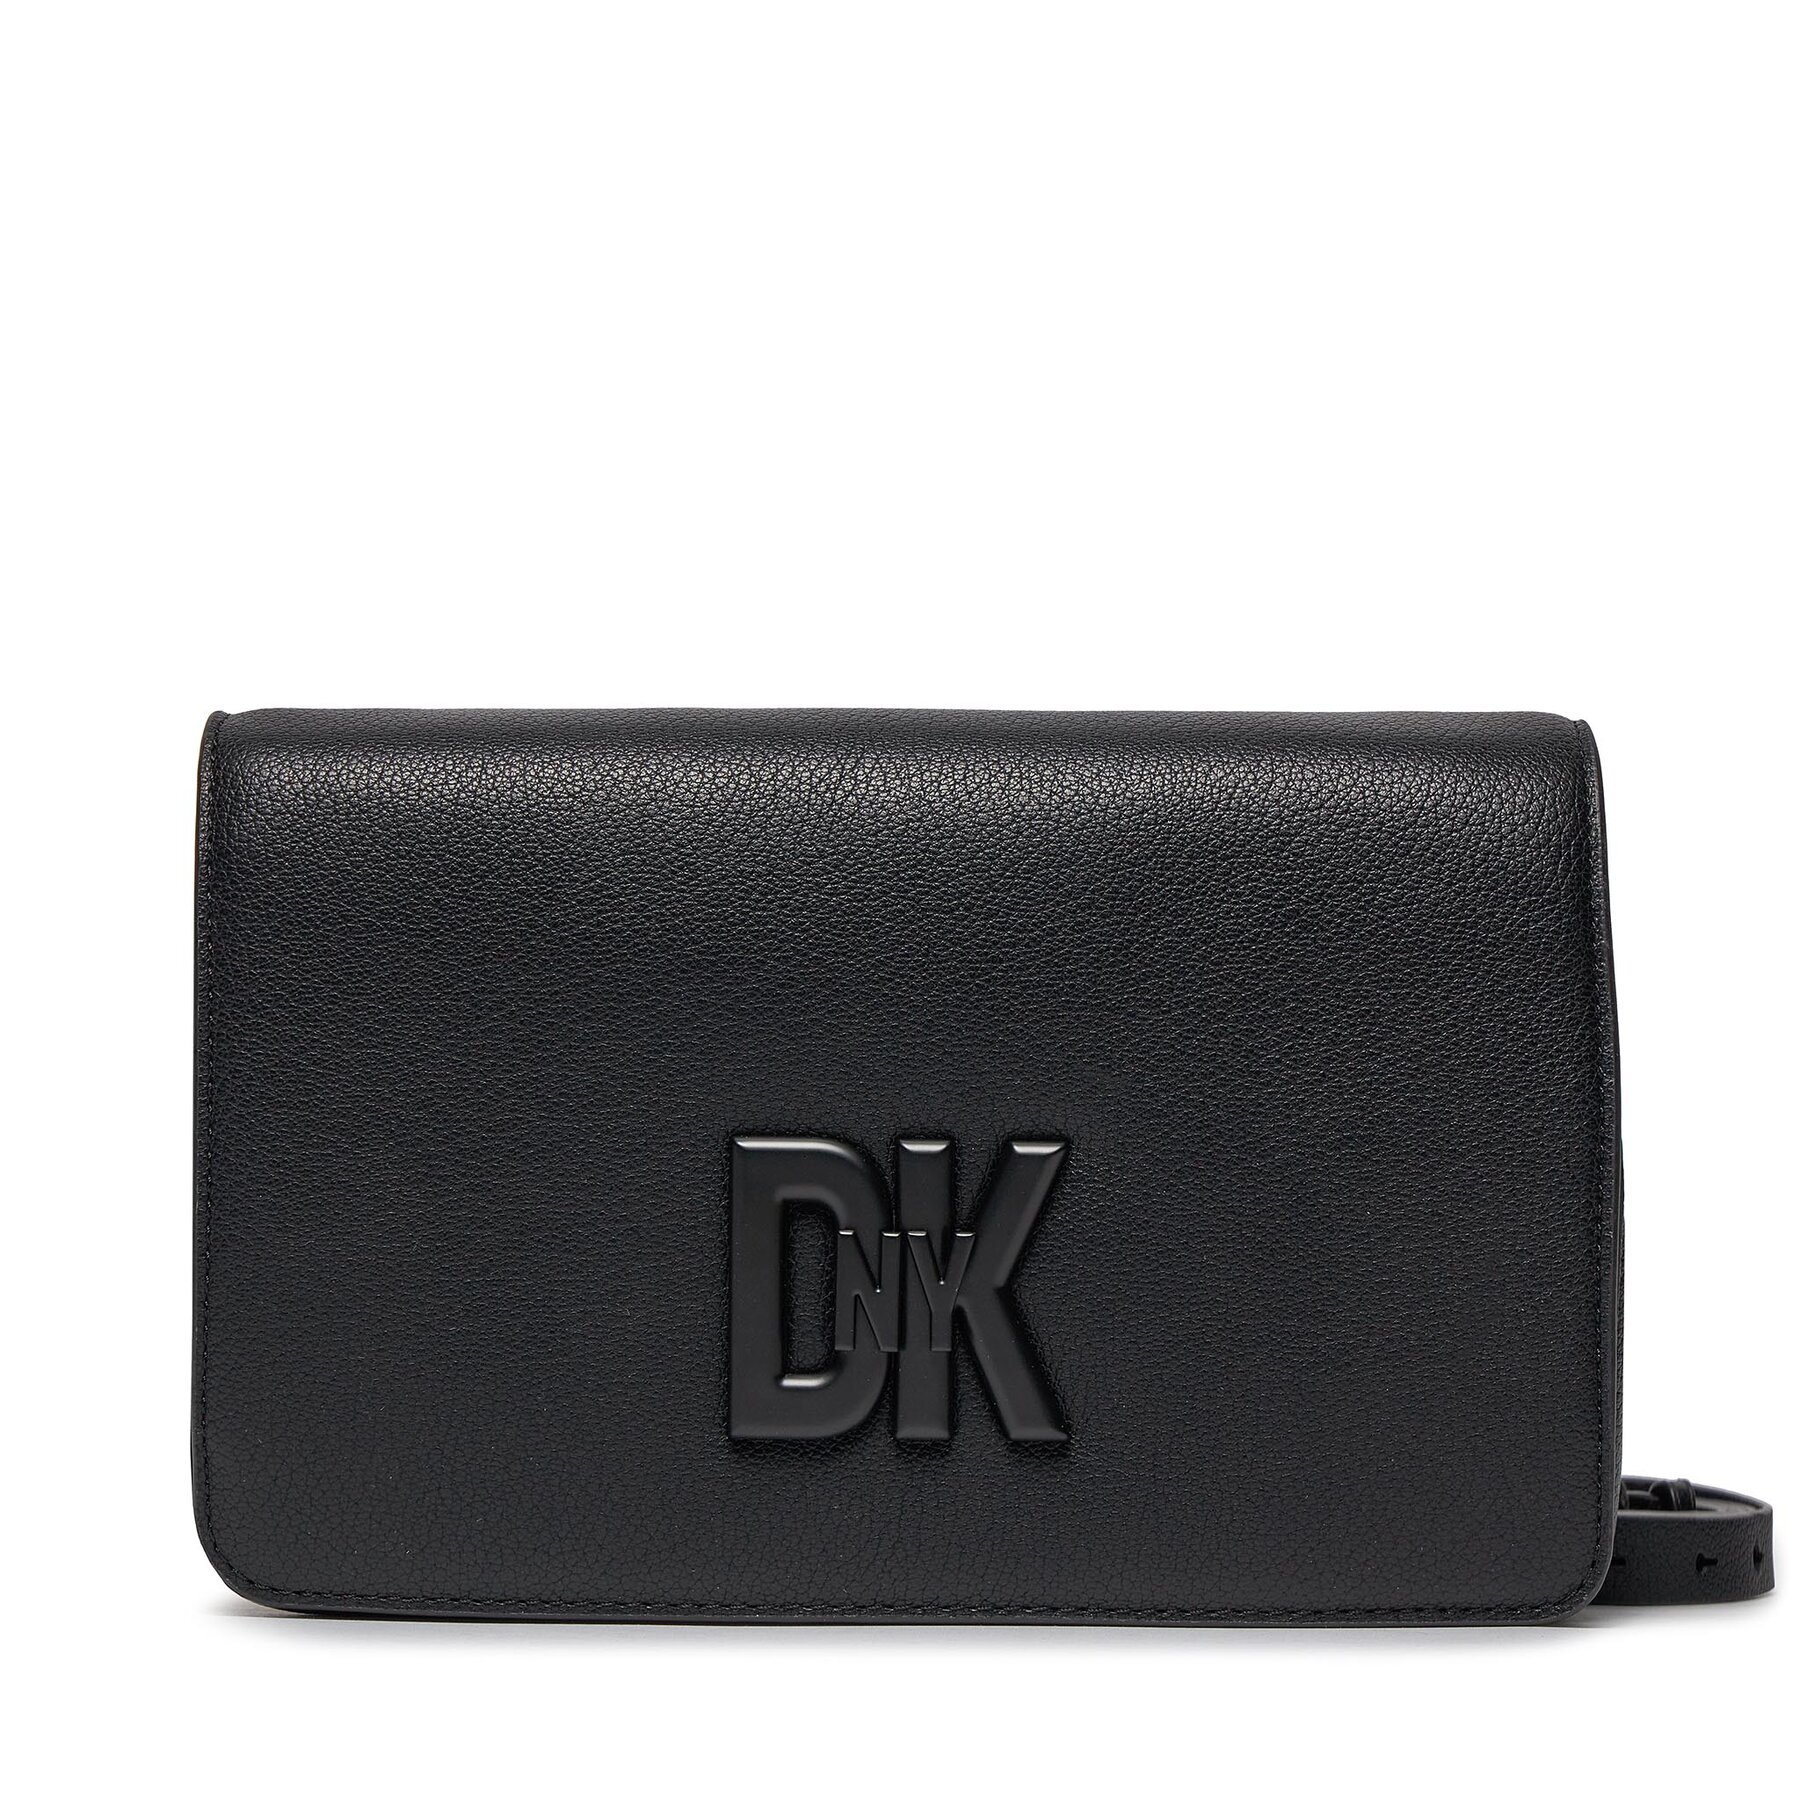 Handtasche DKNY Seventh Avenue Md Fl R33EKY30 Blk/Black BBL von DKNY